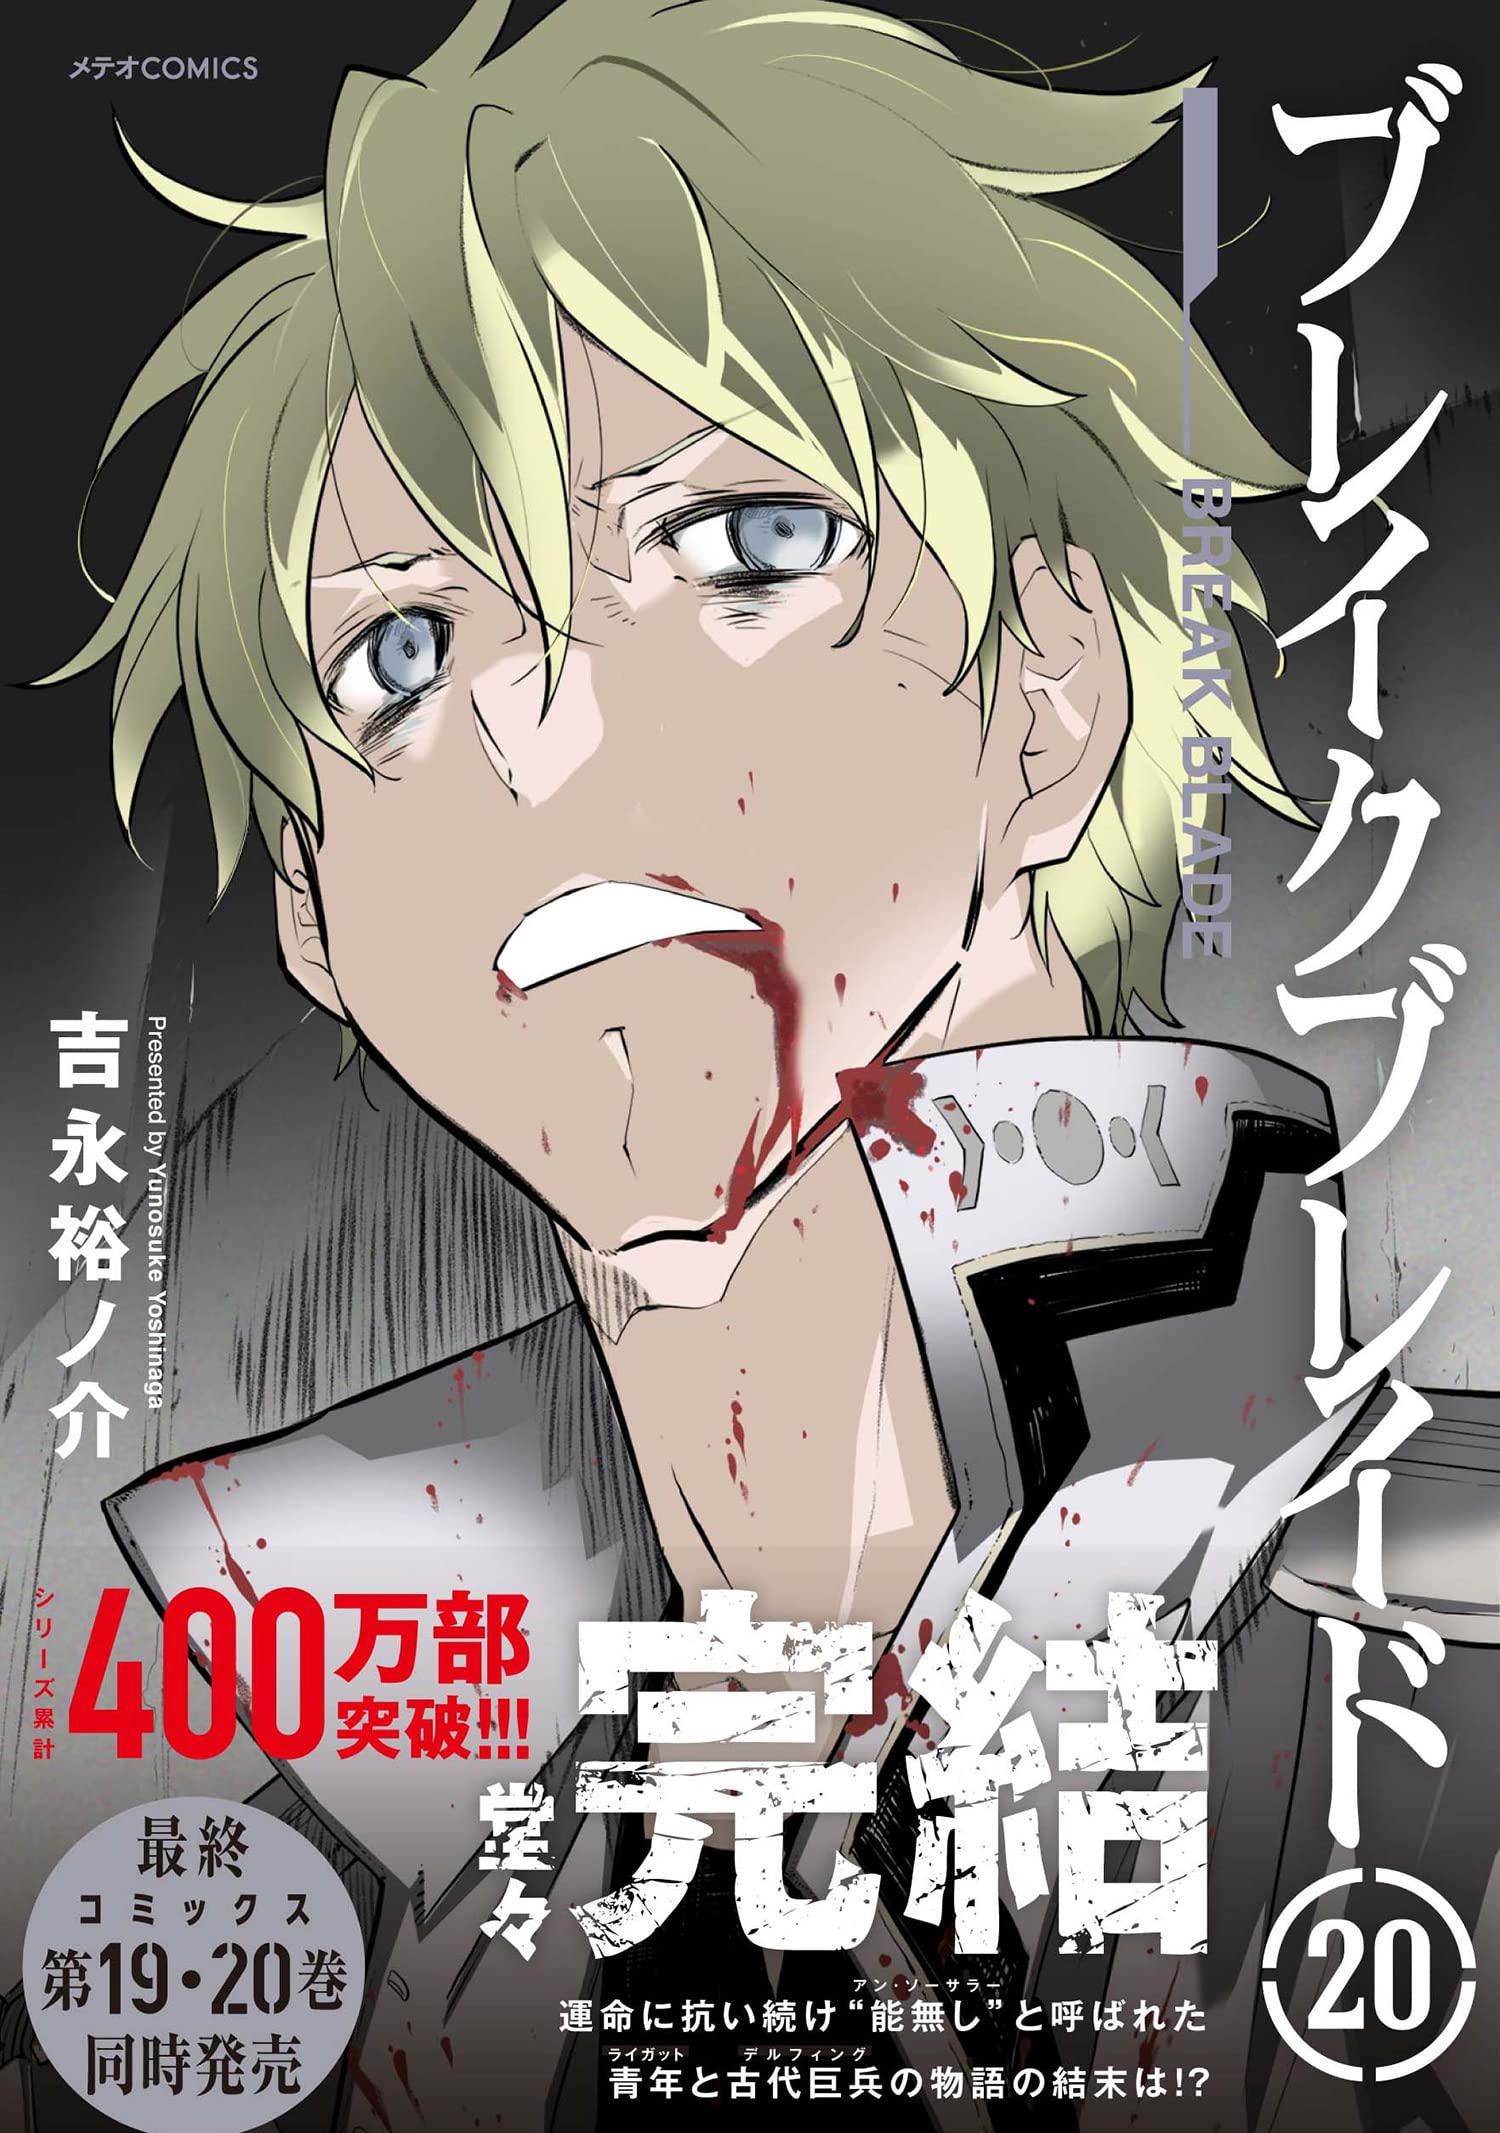 Broken Blade Original Video Anime Still in the Works - News - Anime News  Network